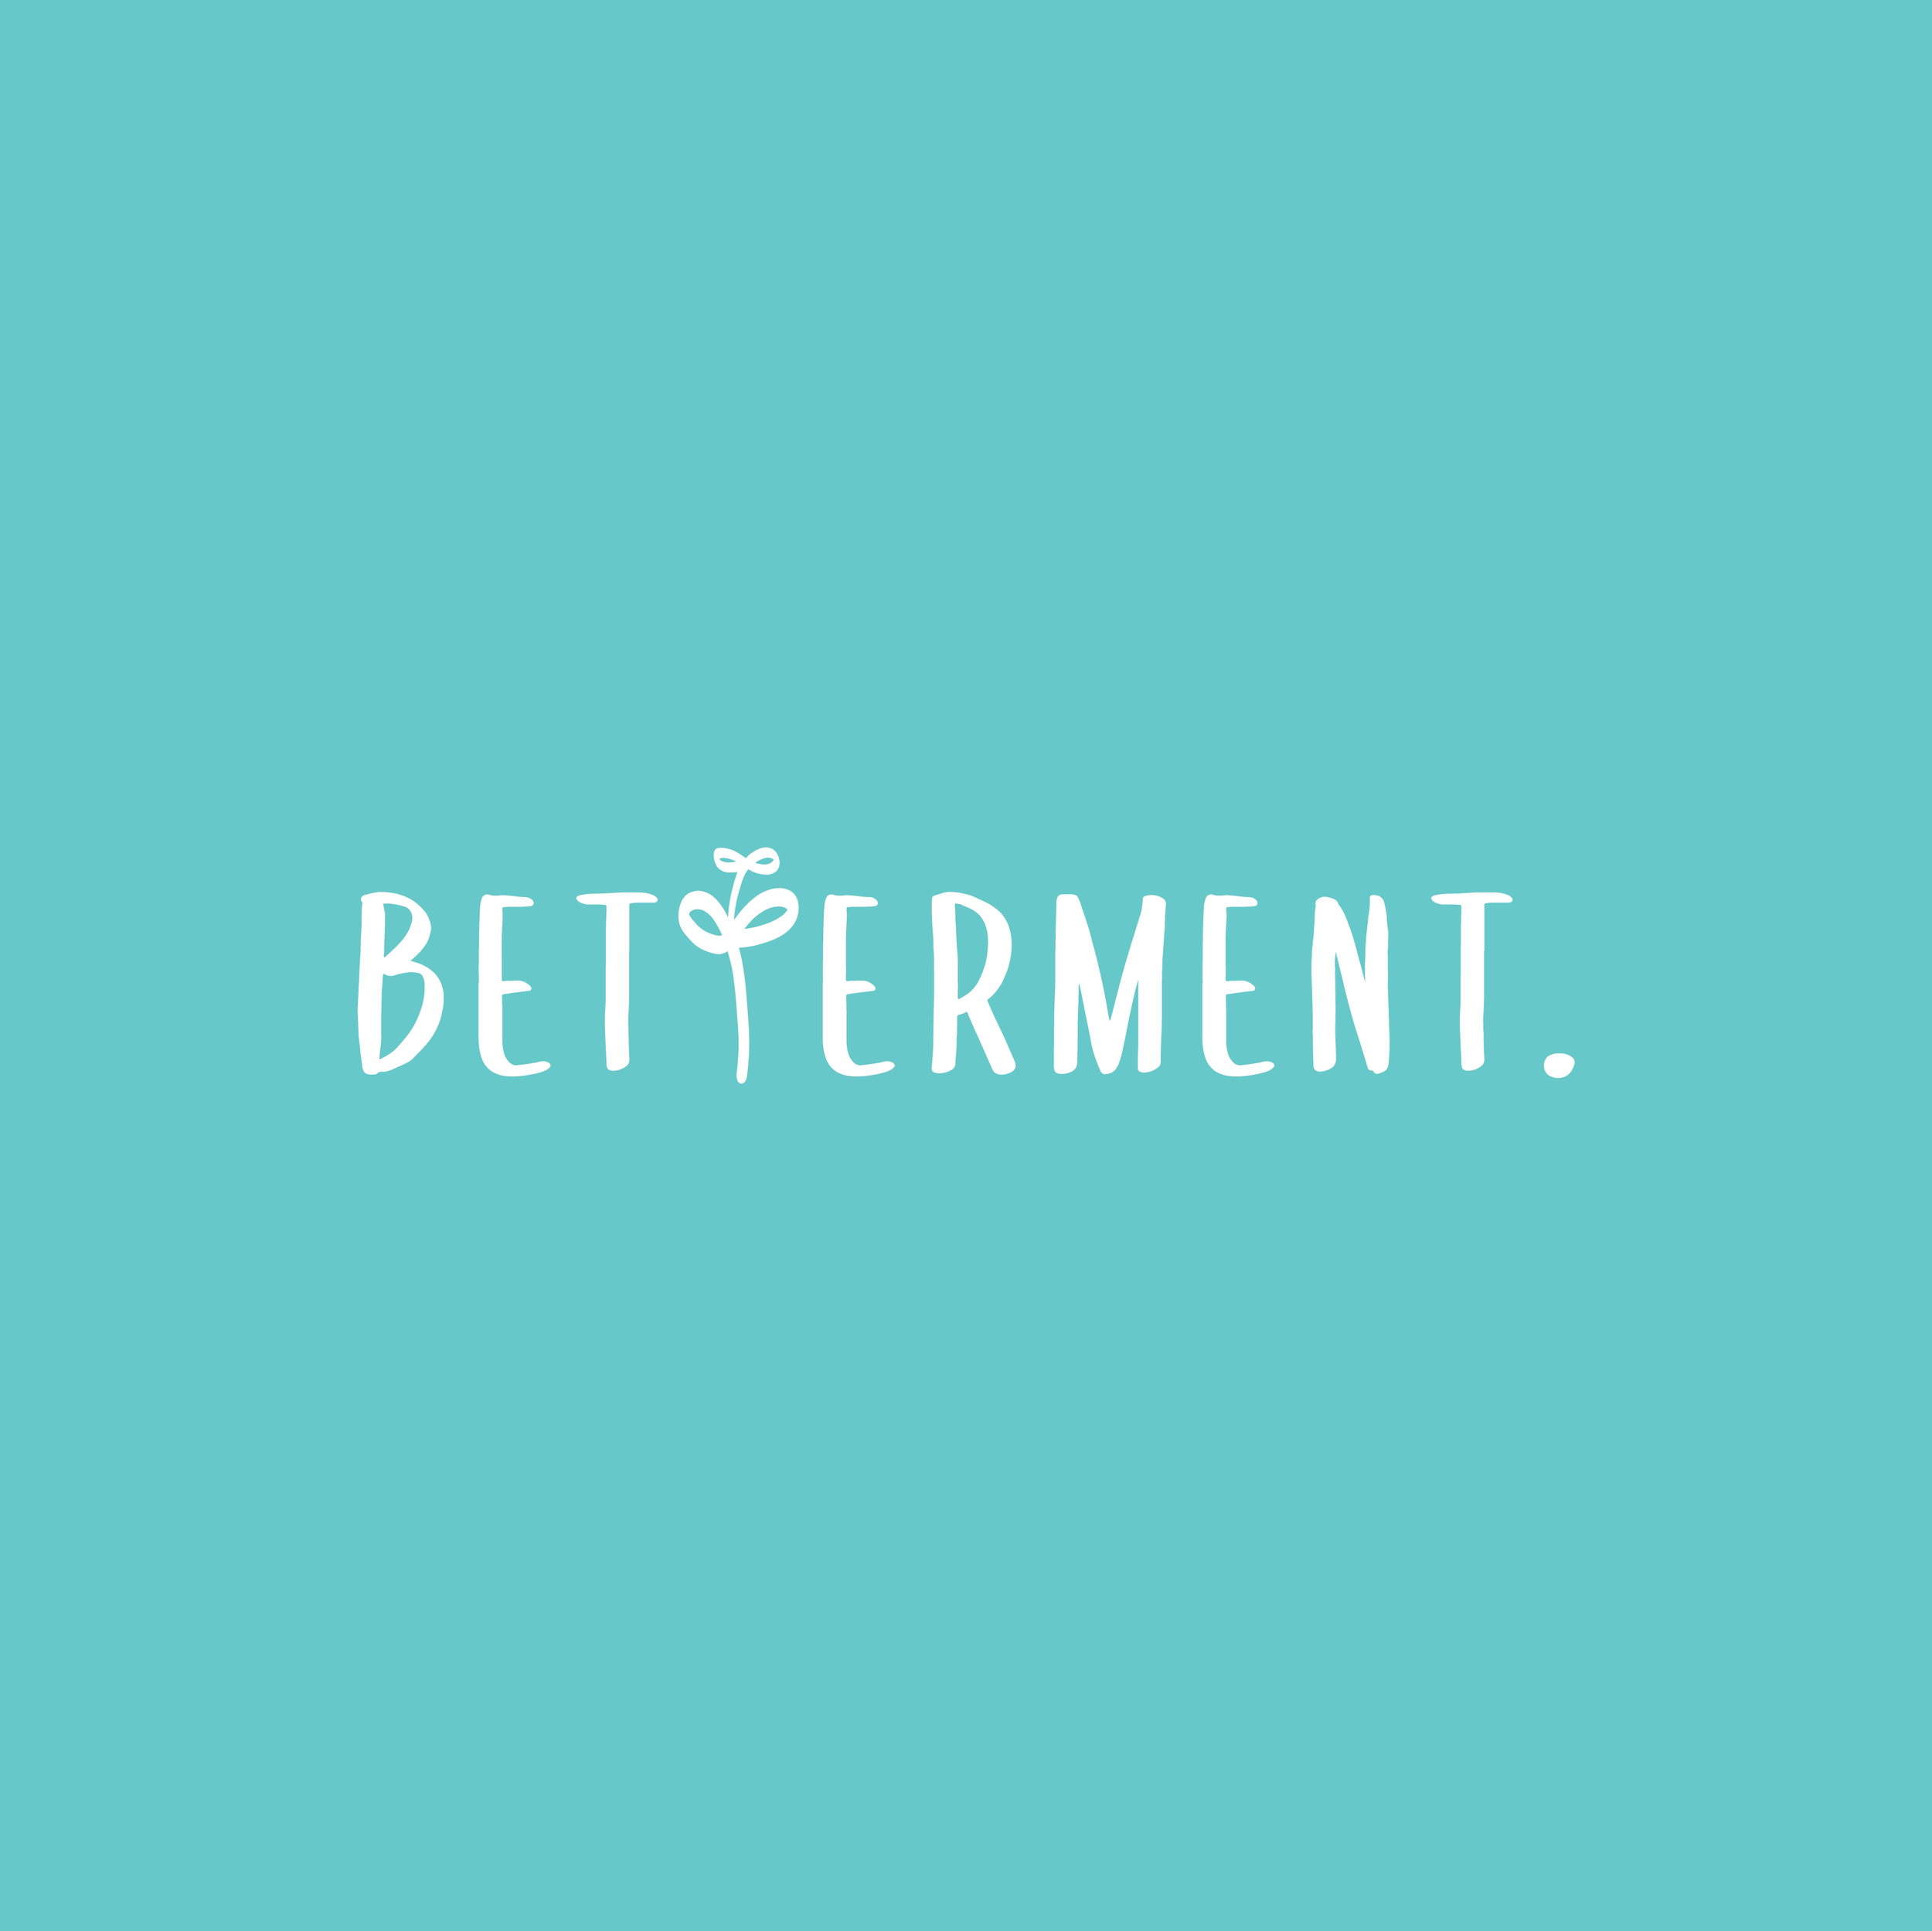 Betterment. Logo Design by Cheyney